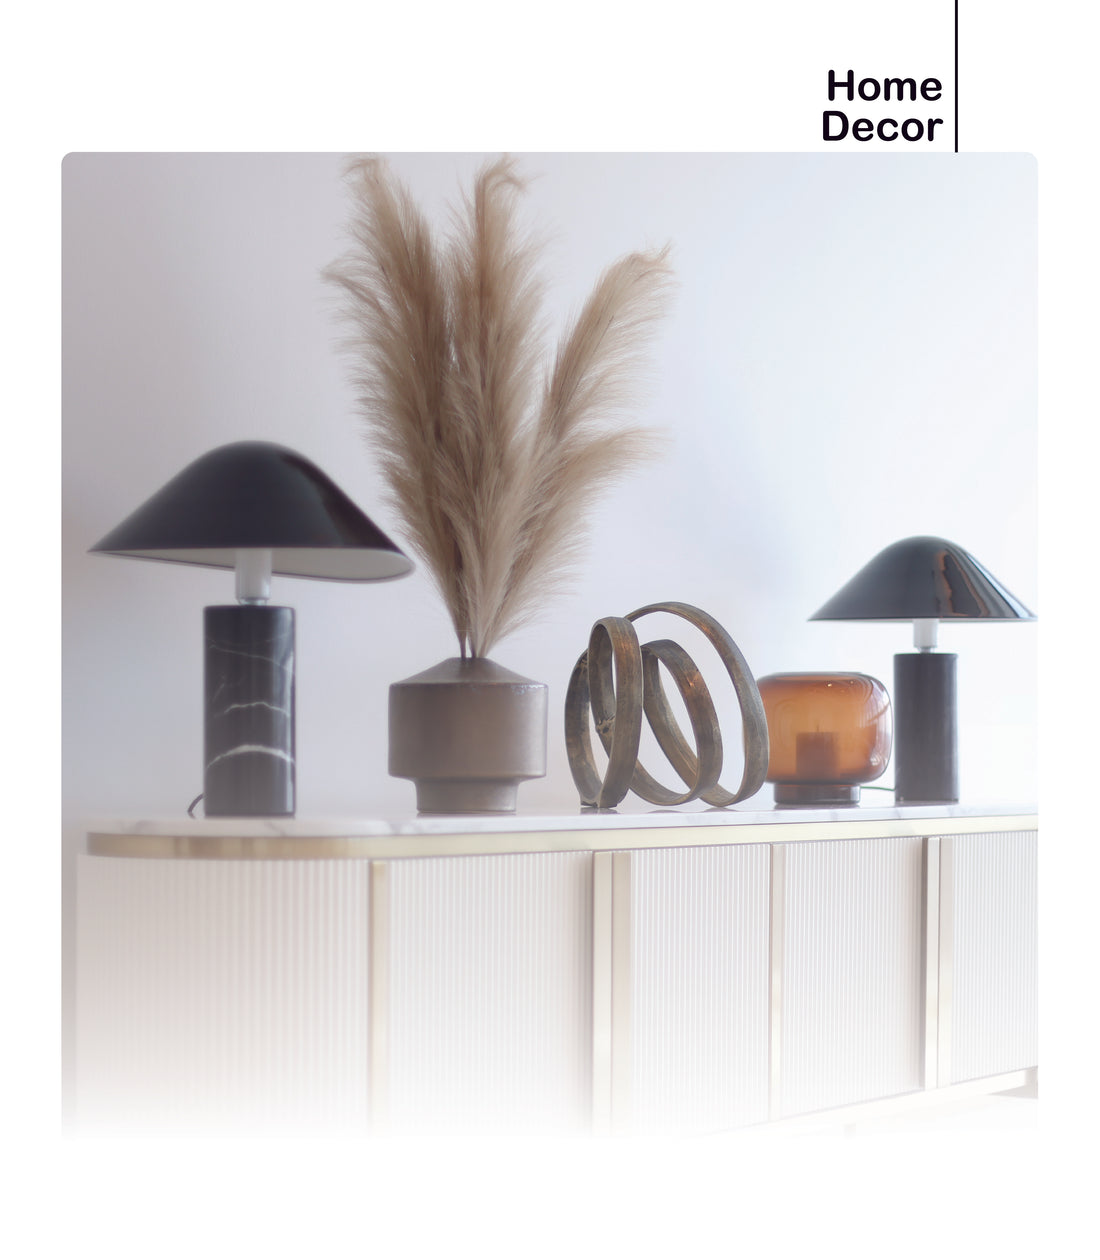 Home Decor Collection - HyggeHomey